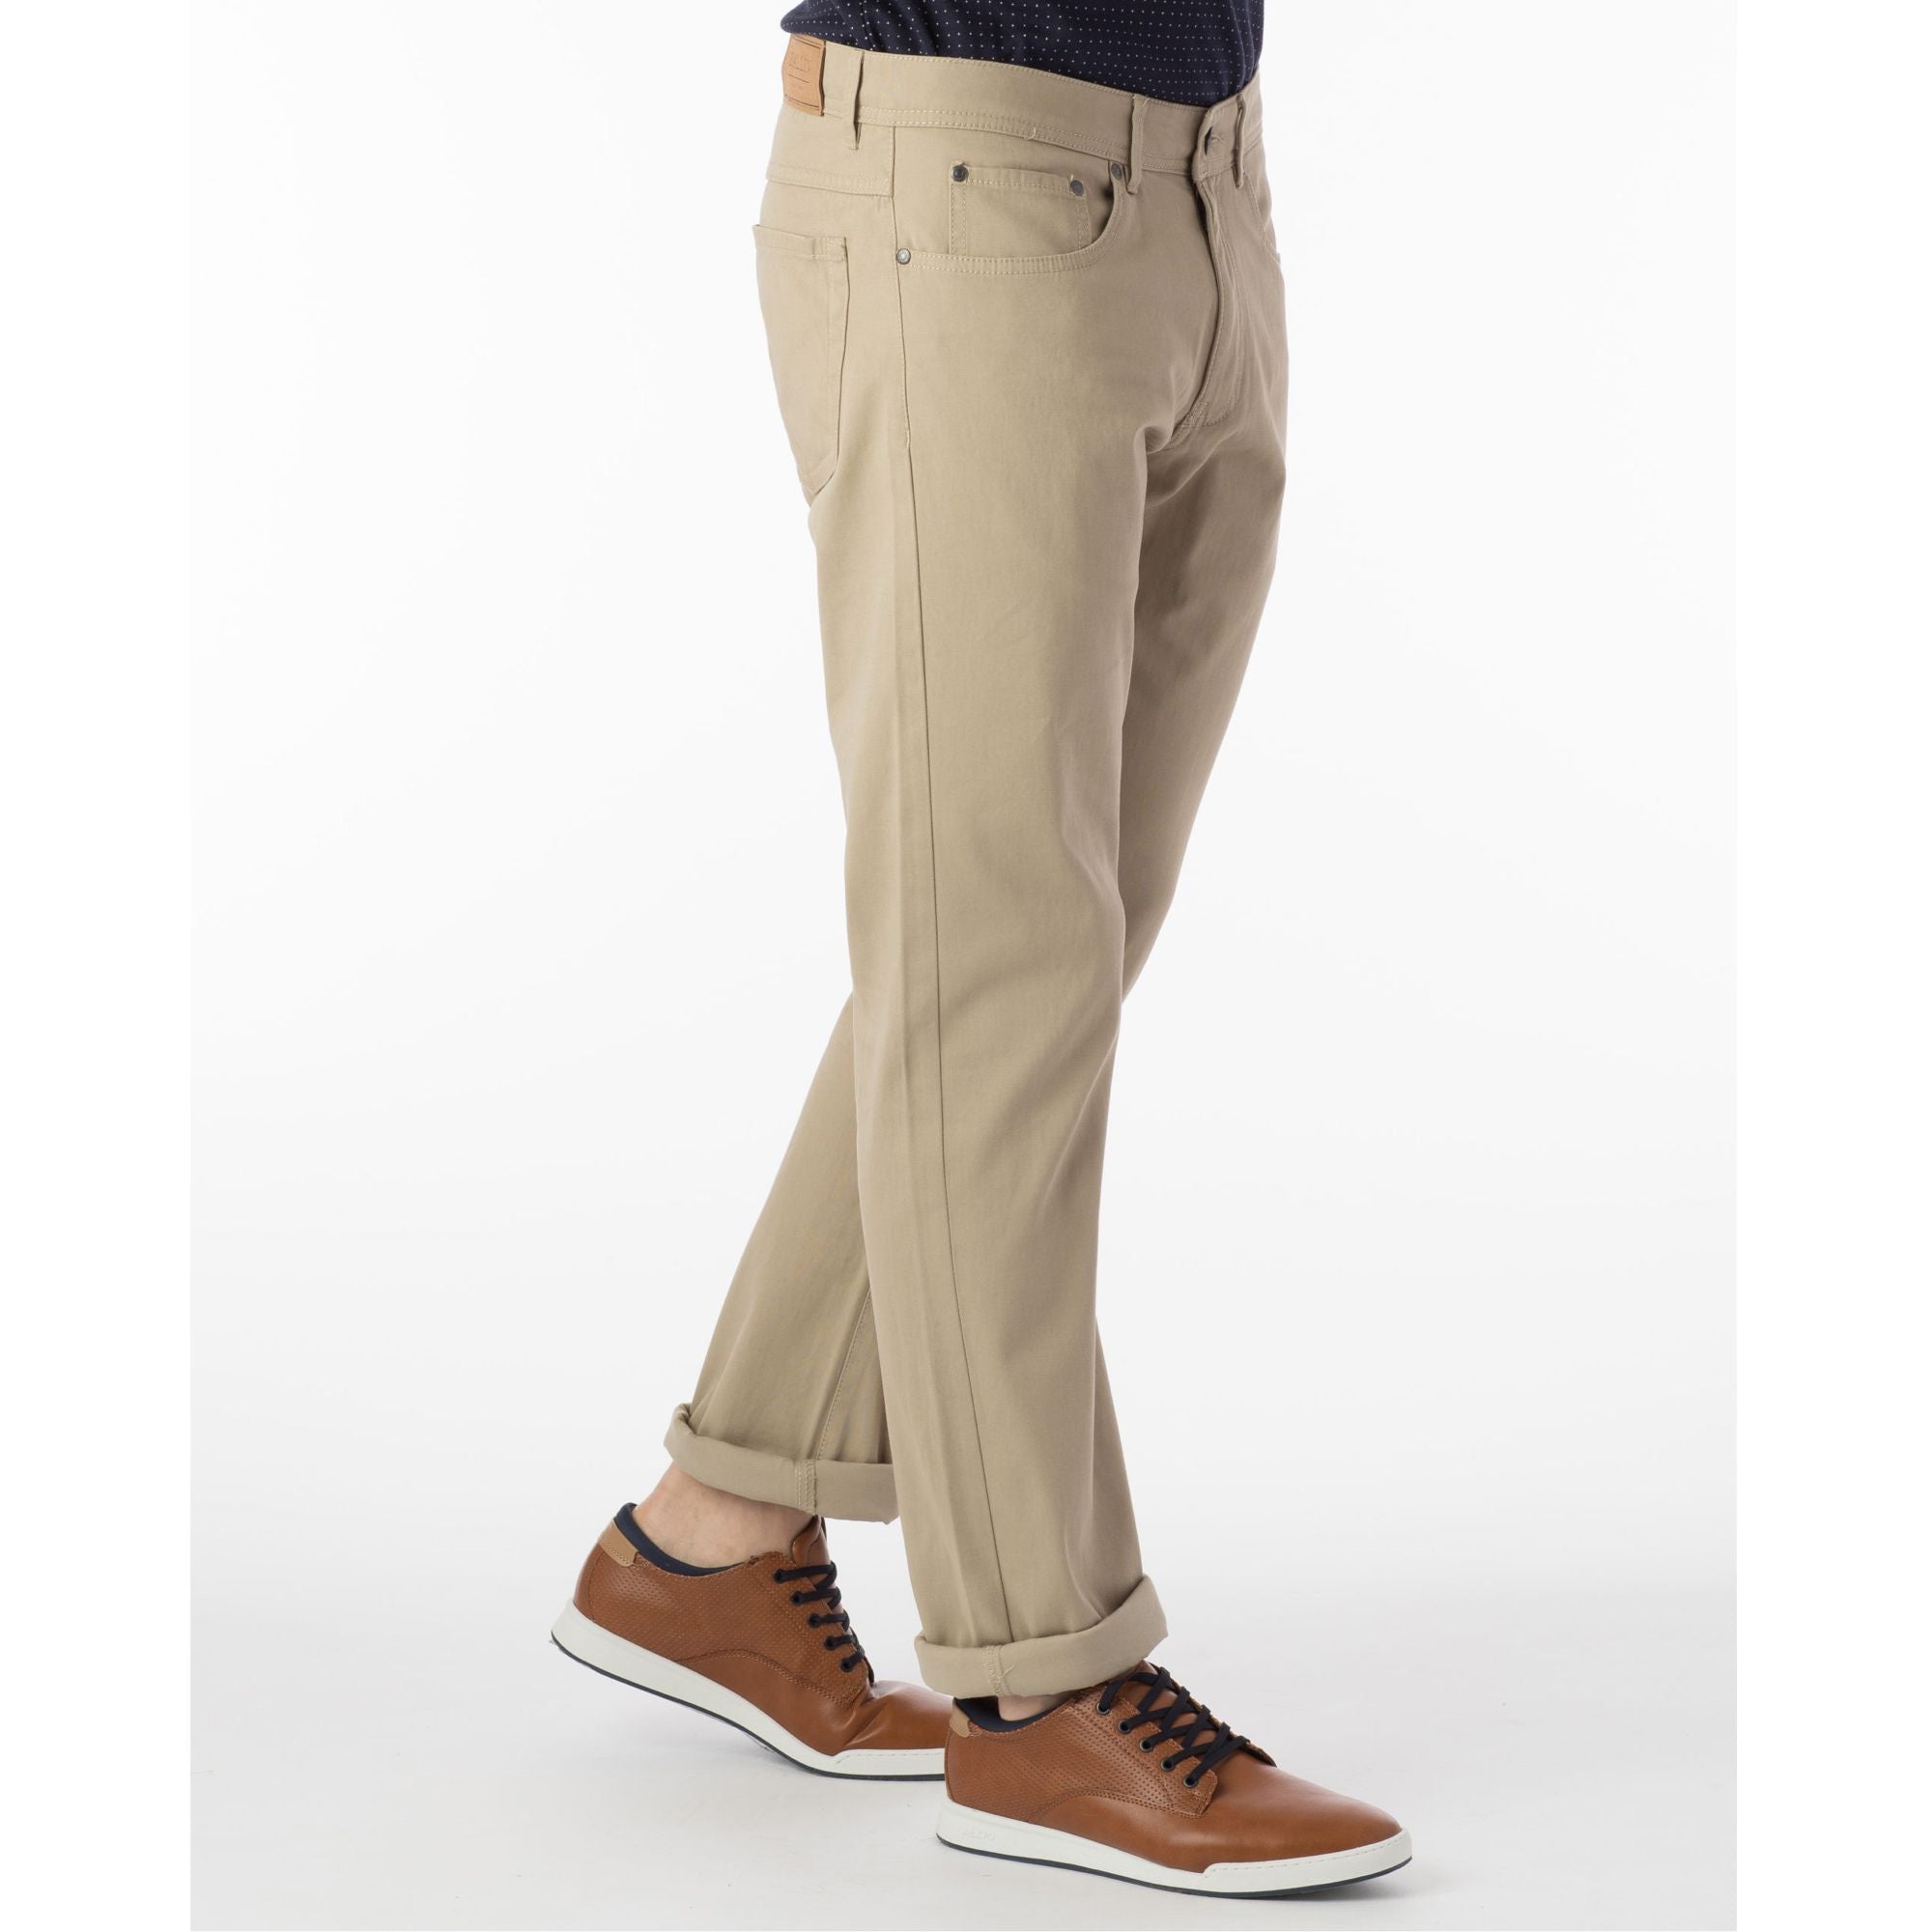 Perma Color Pima Twill 5-Pocket Pants in True Khaki (Crescent Modern Fit) by Ballin